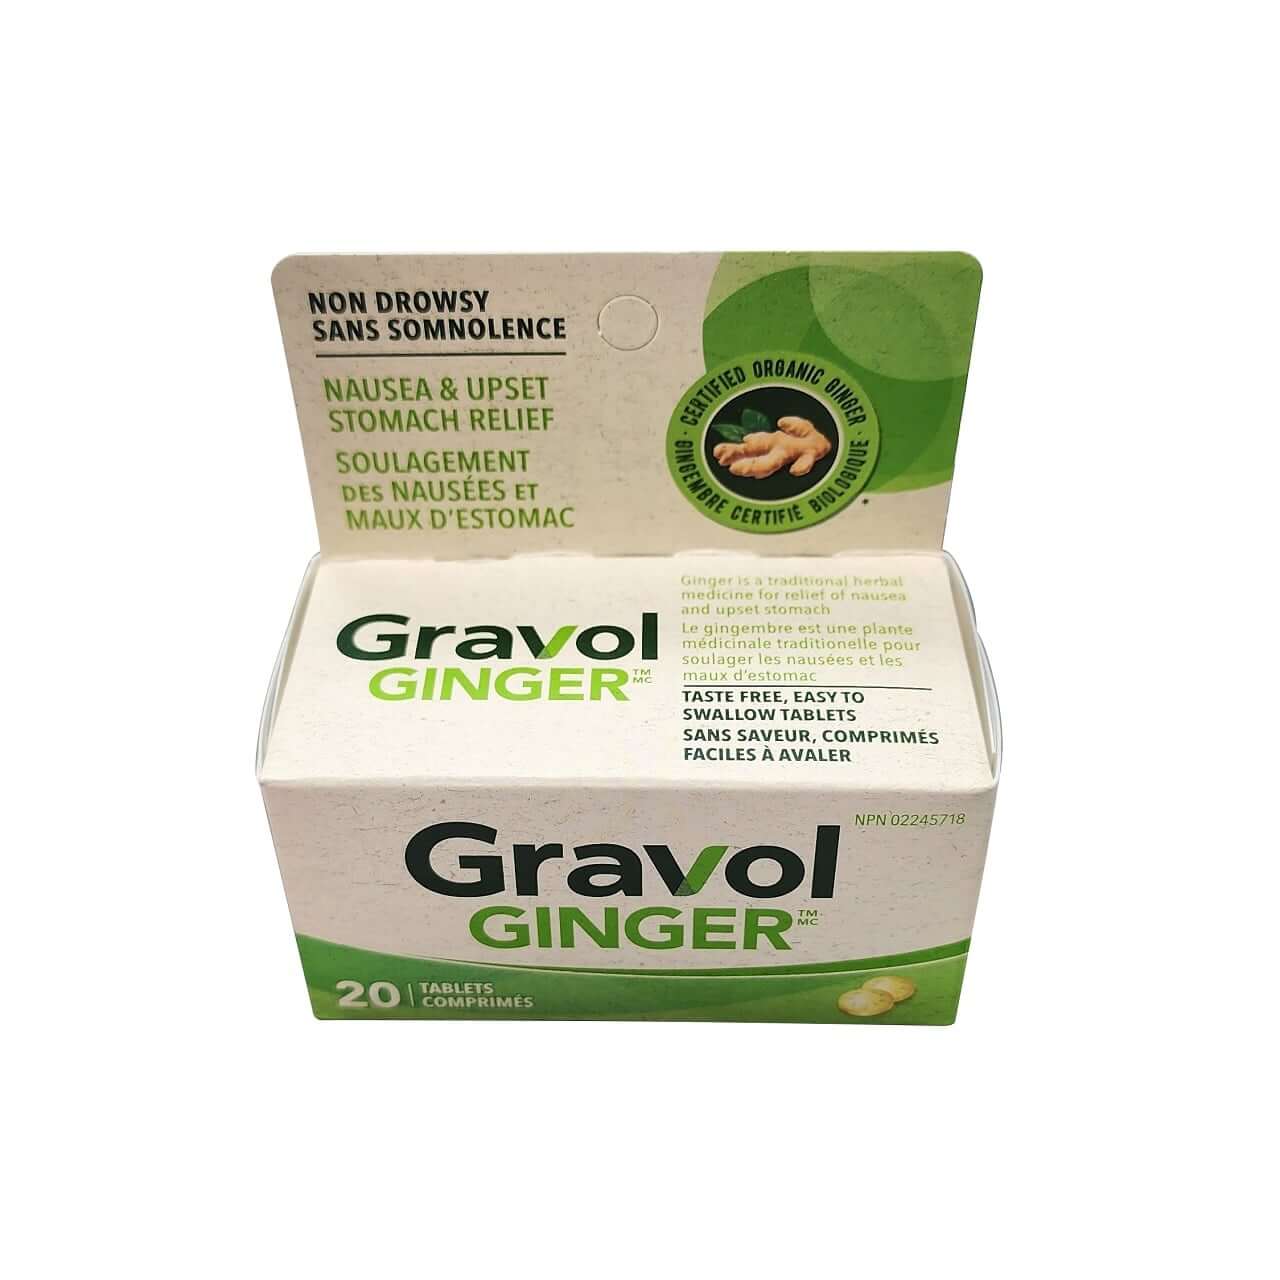 Product label and description for Gravol Ginger (20 tablets)